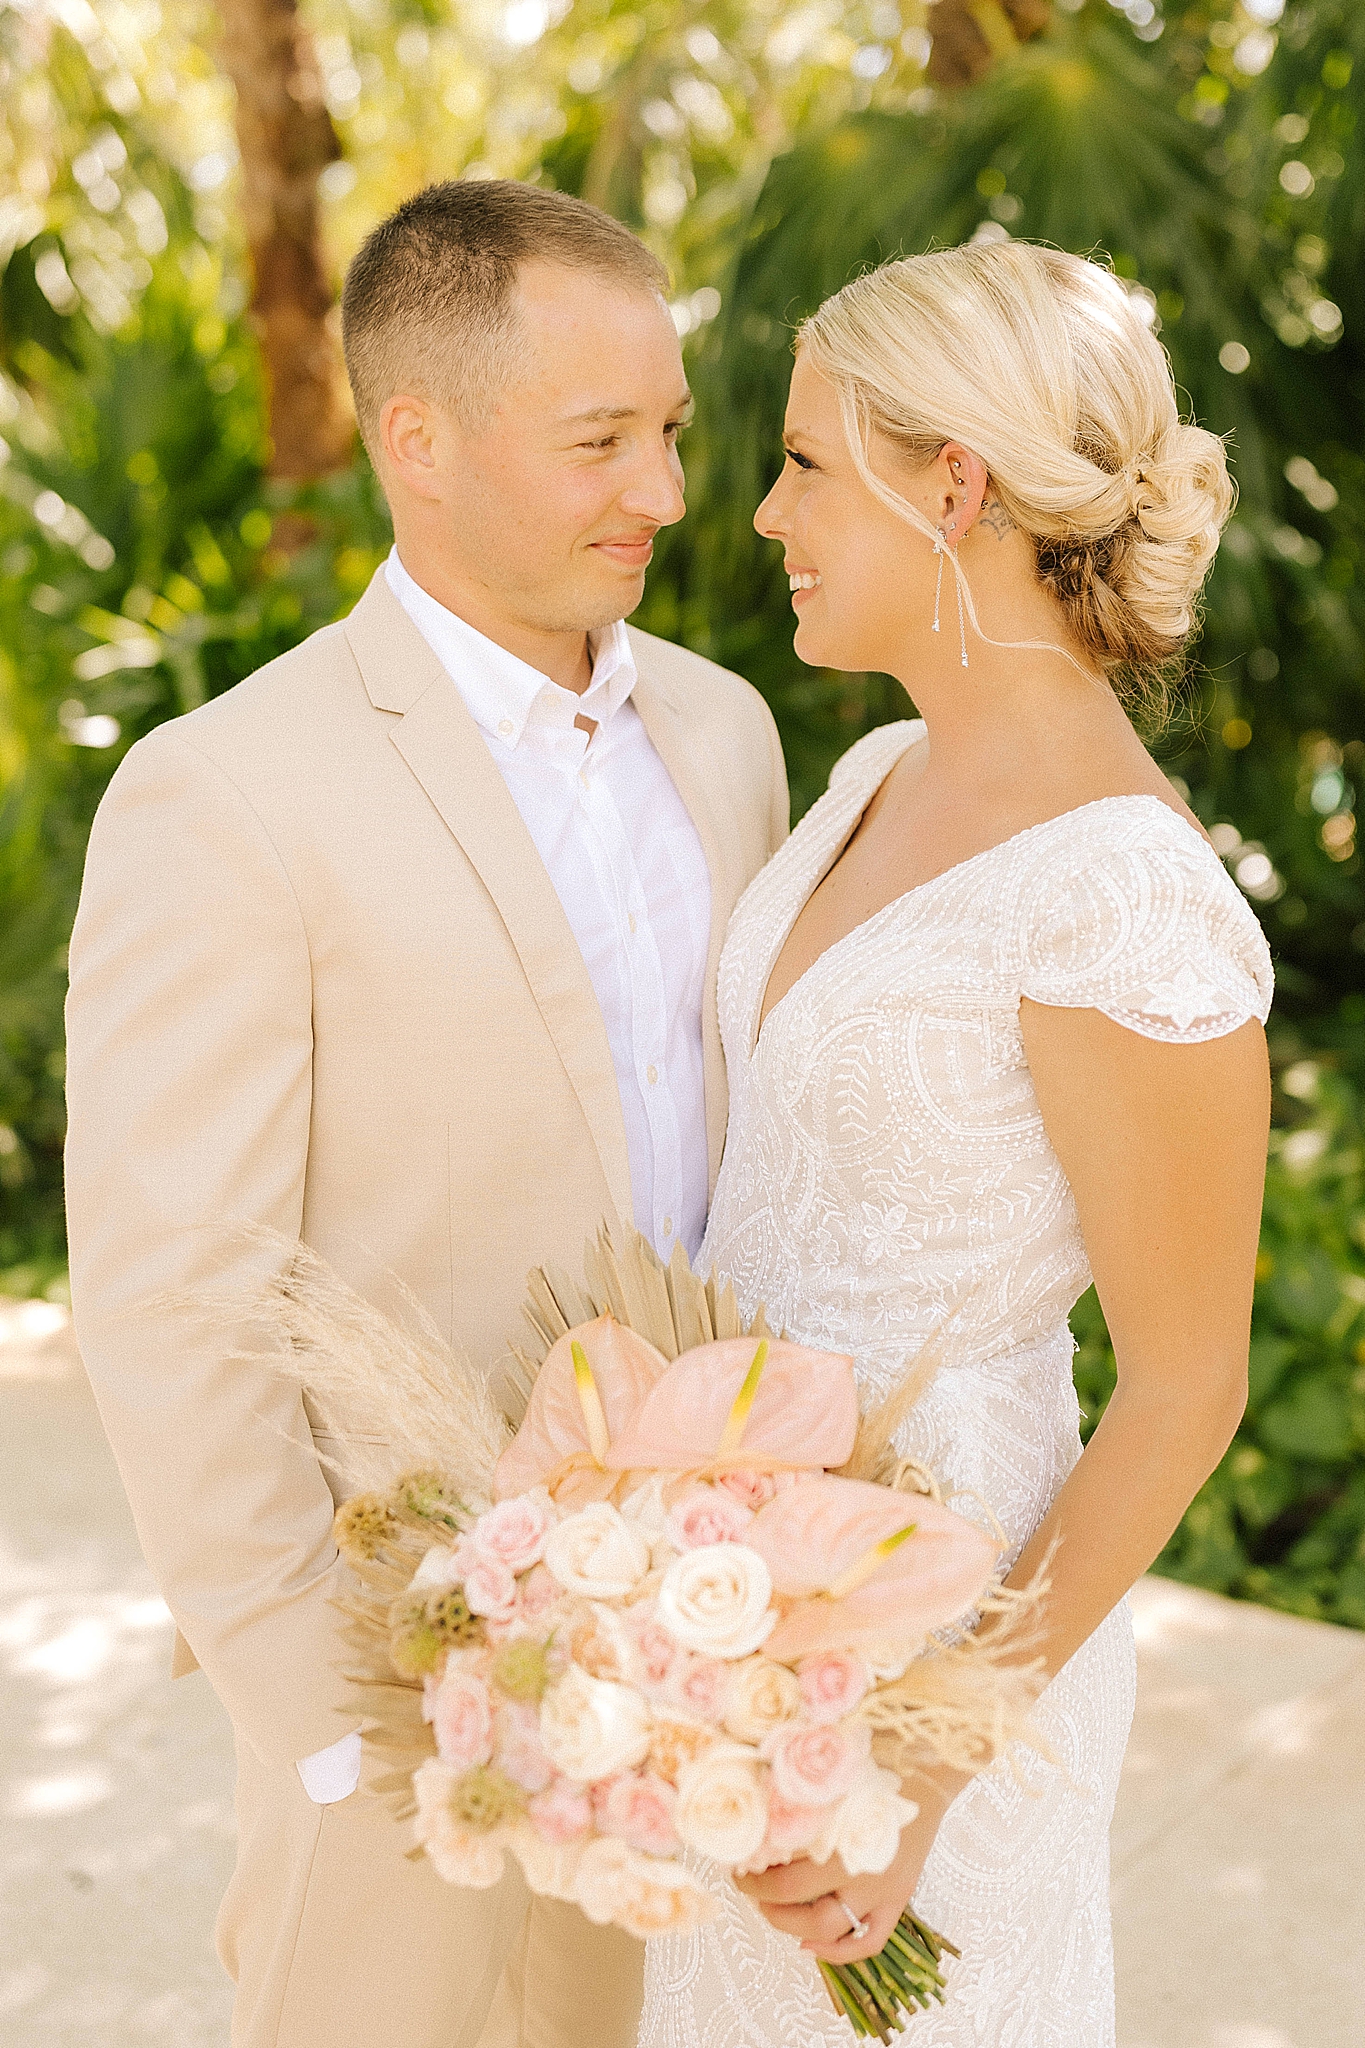 newlyweds pose by palm trees during Playa Del Carmen Destination Wedding